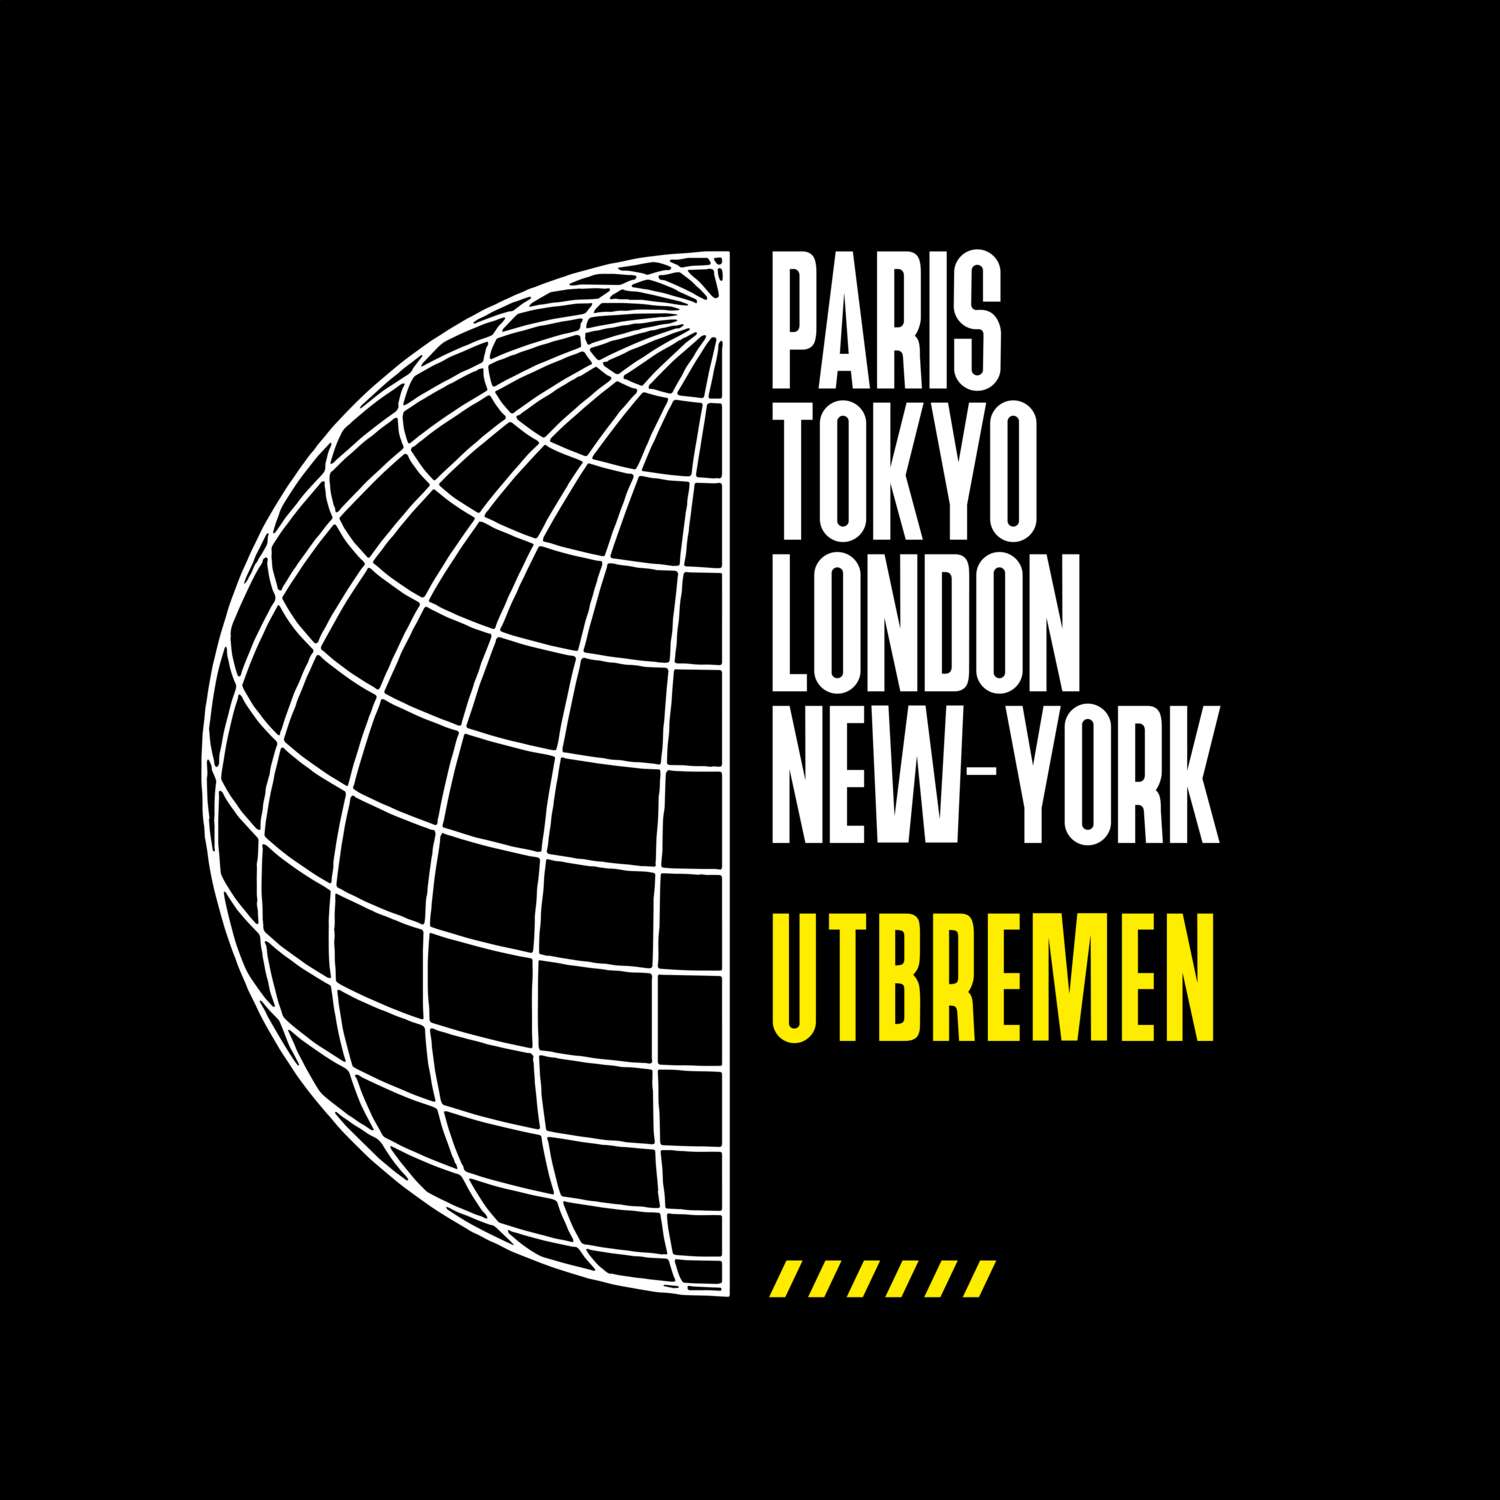 Utbremen T-Shirt »Paris Tokyo London«